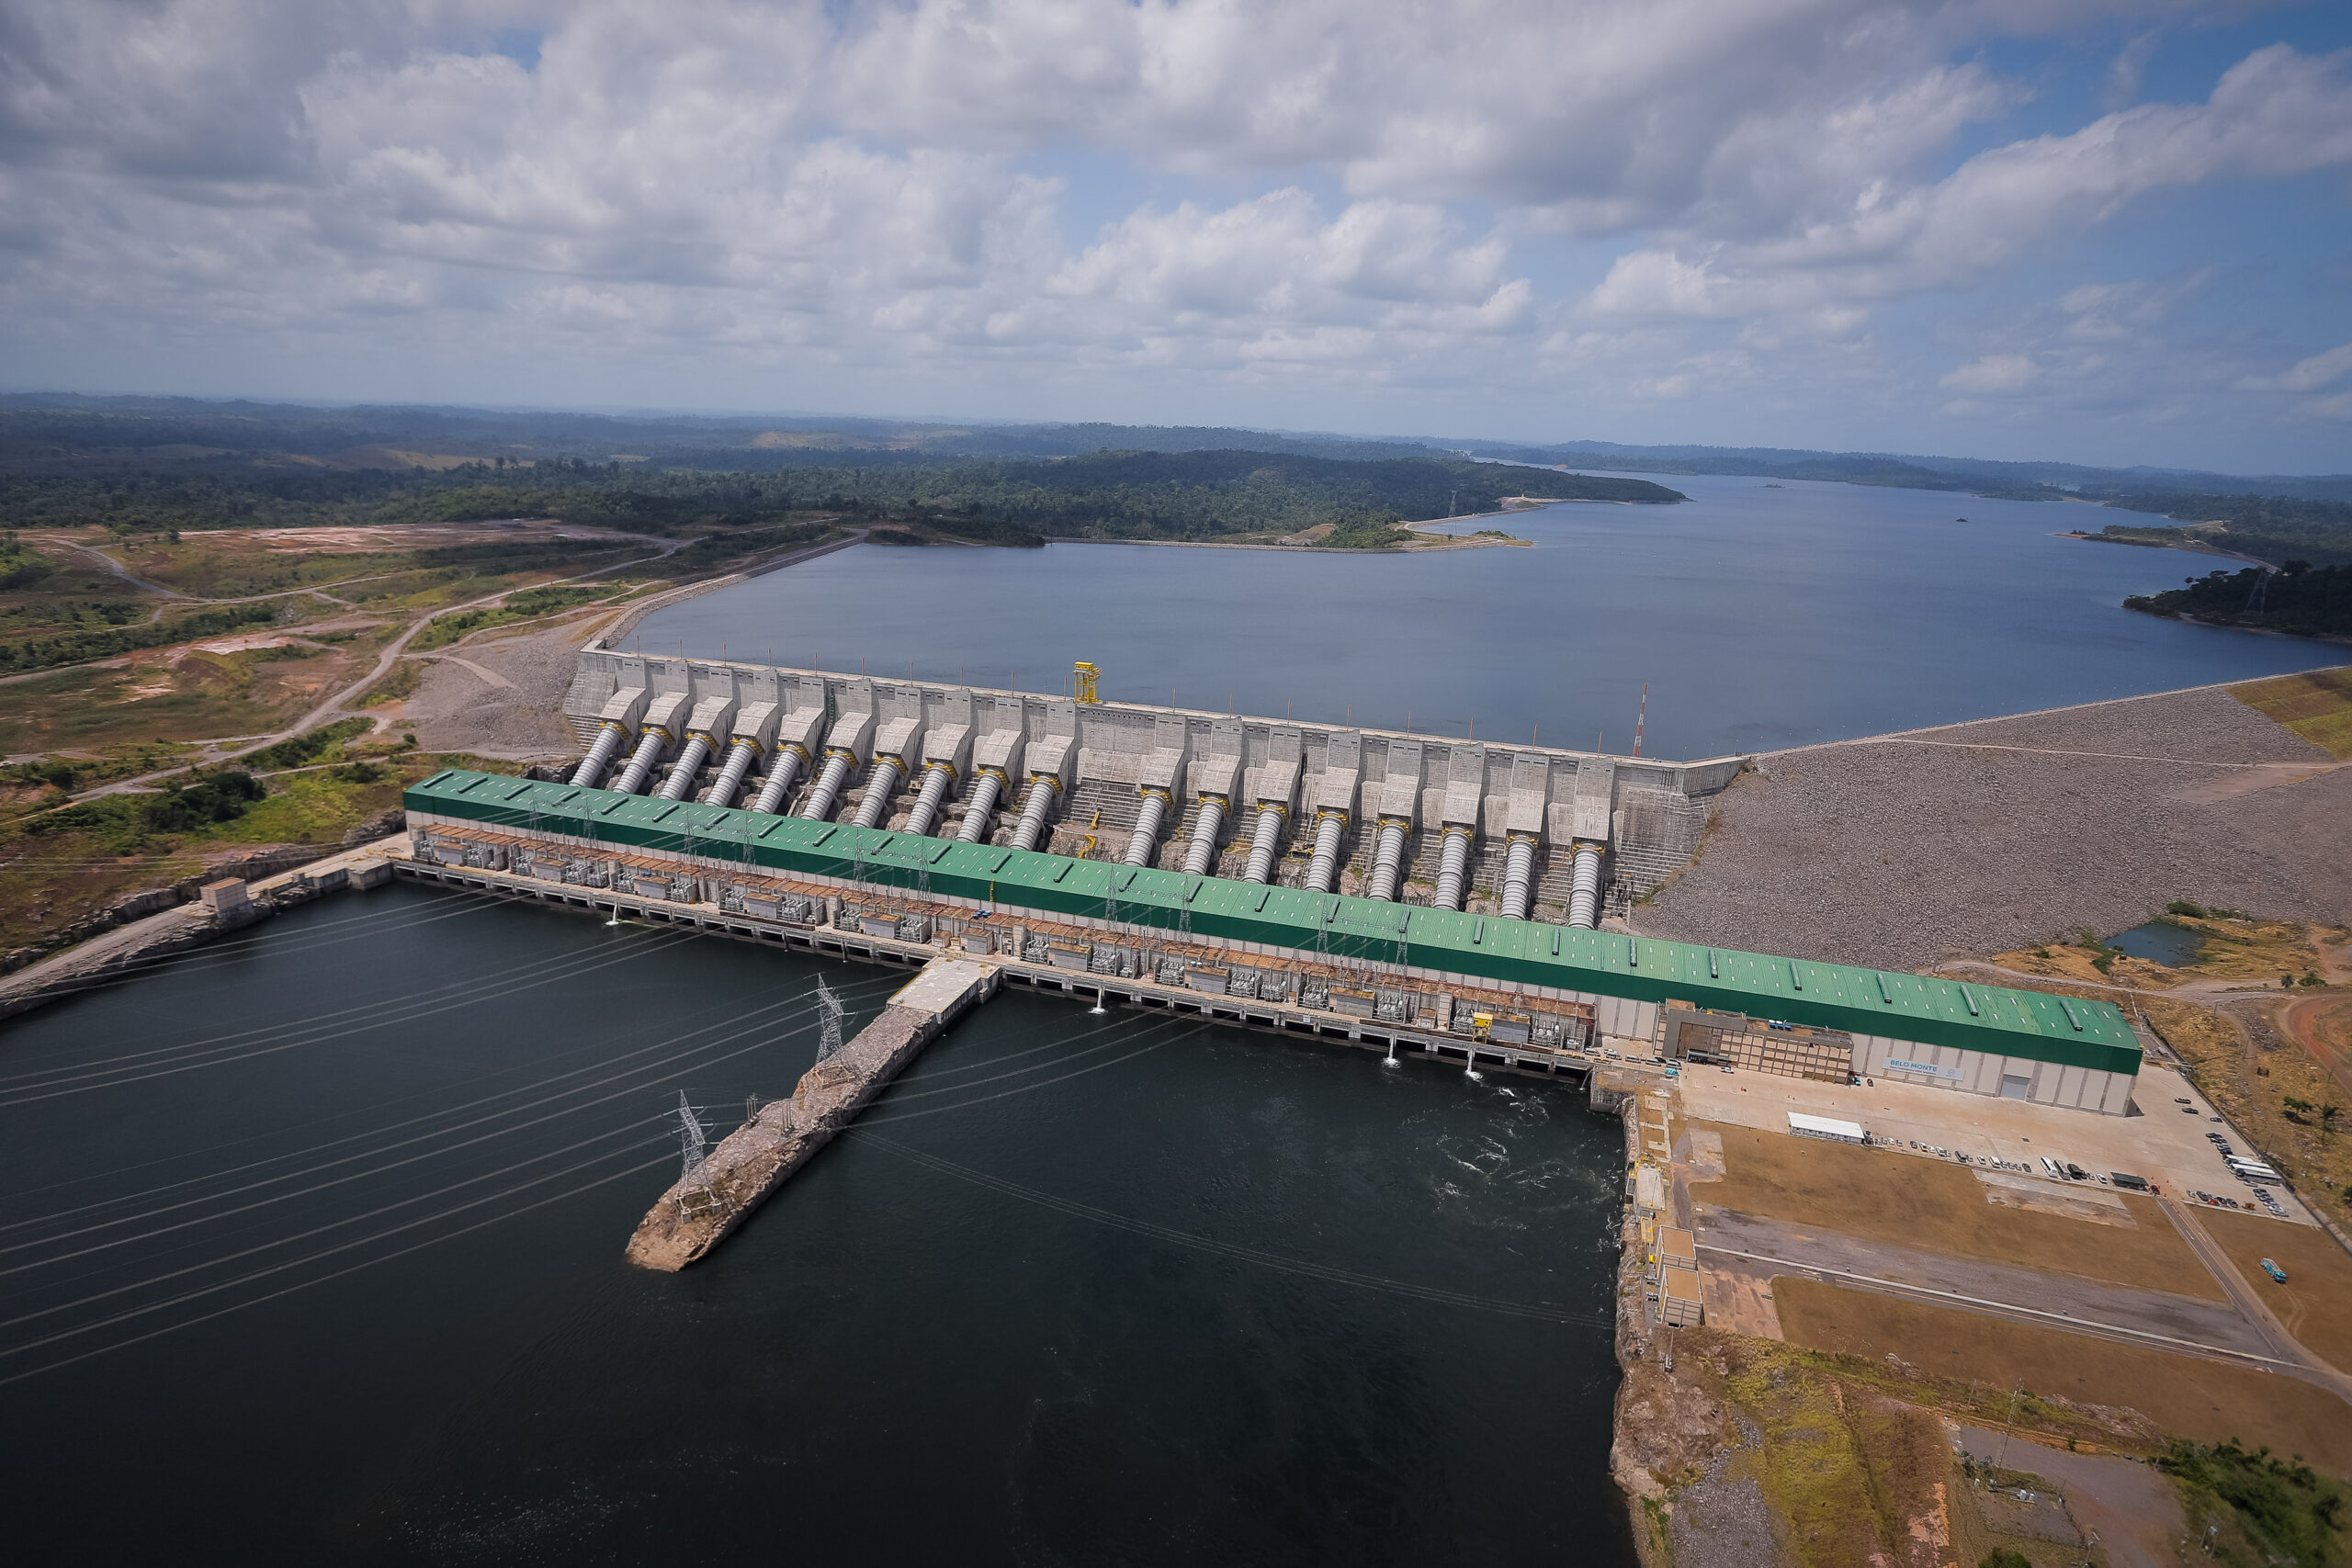 Belo Monte dam in the Amazon lowlands of Brazil